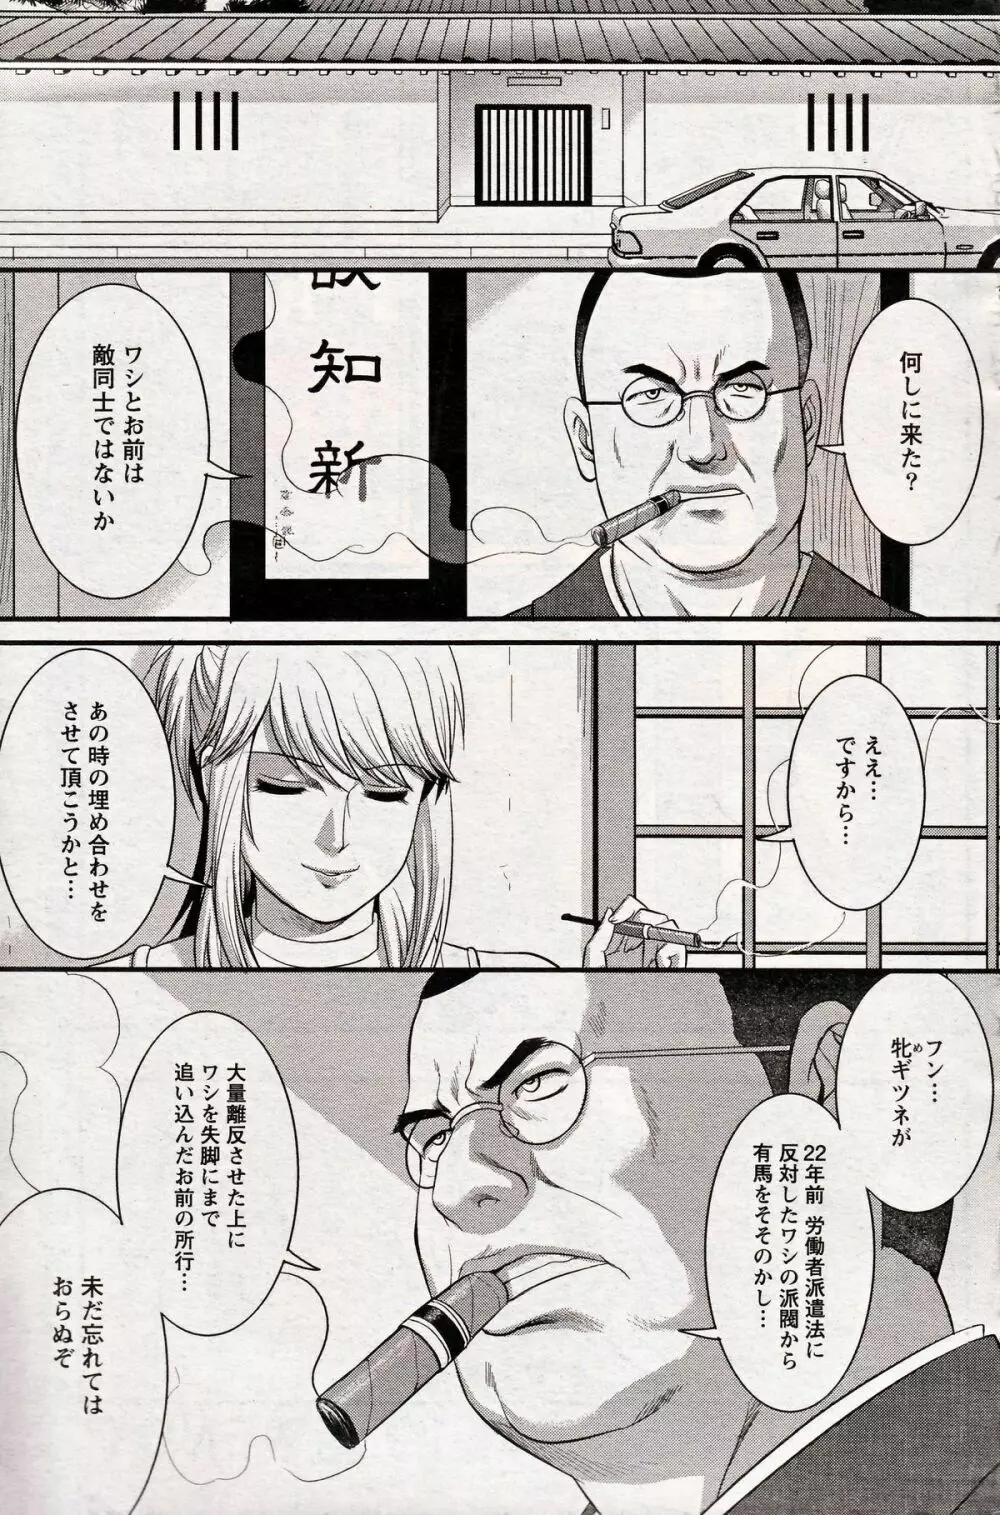 Haken no Muuko-san 19 19ページ